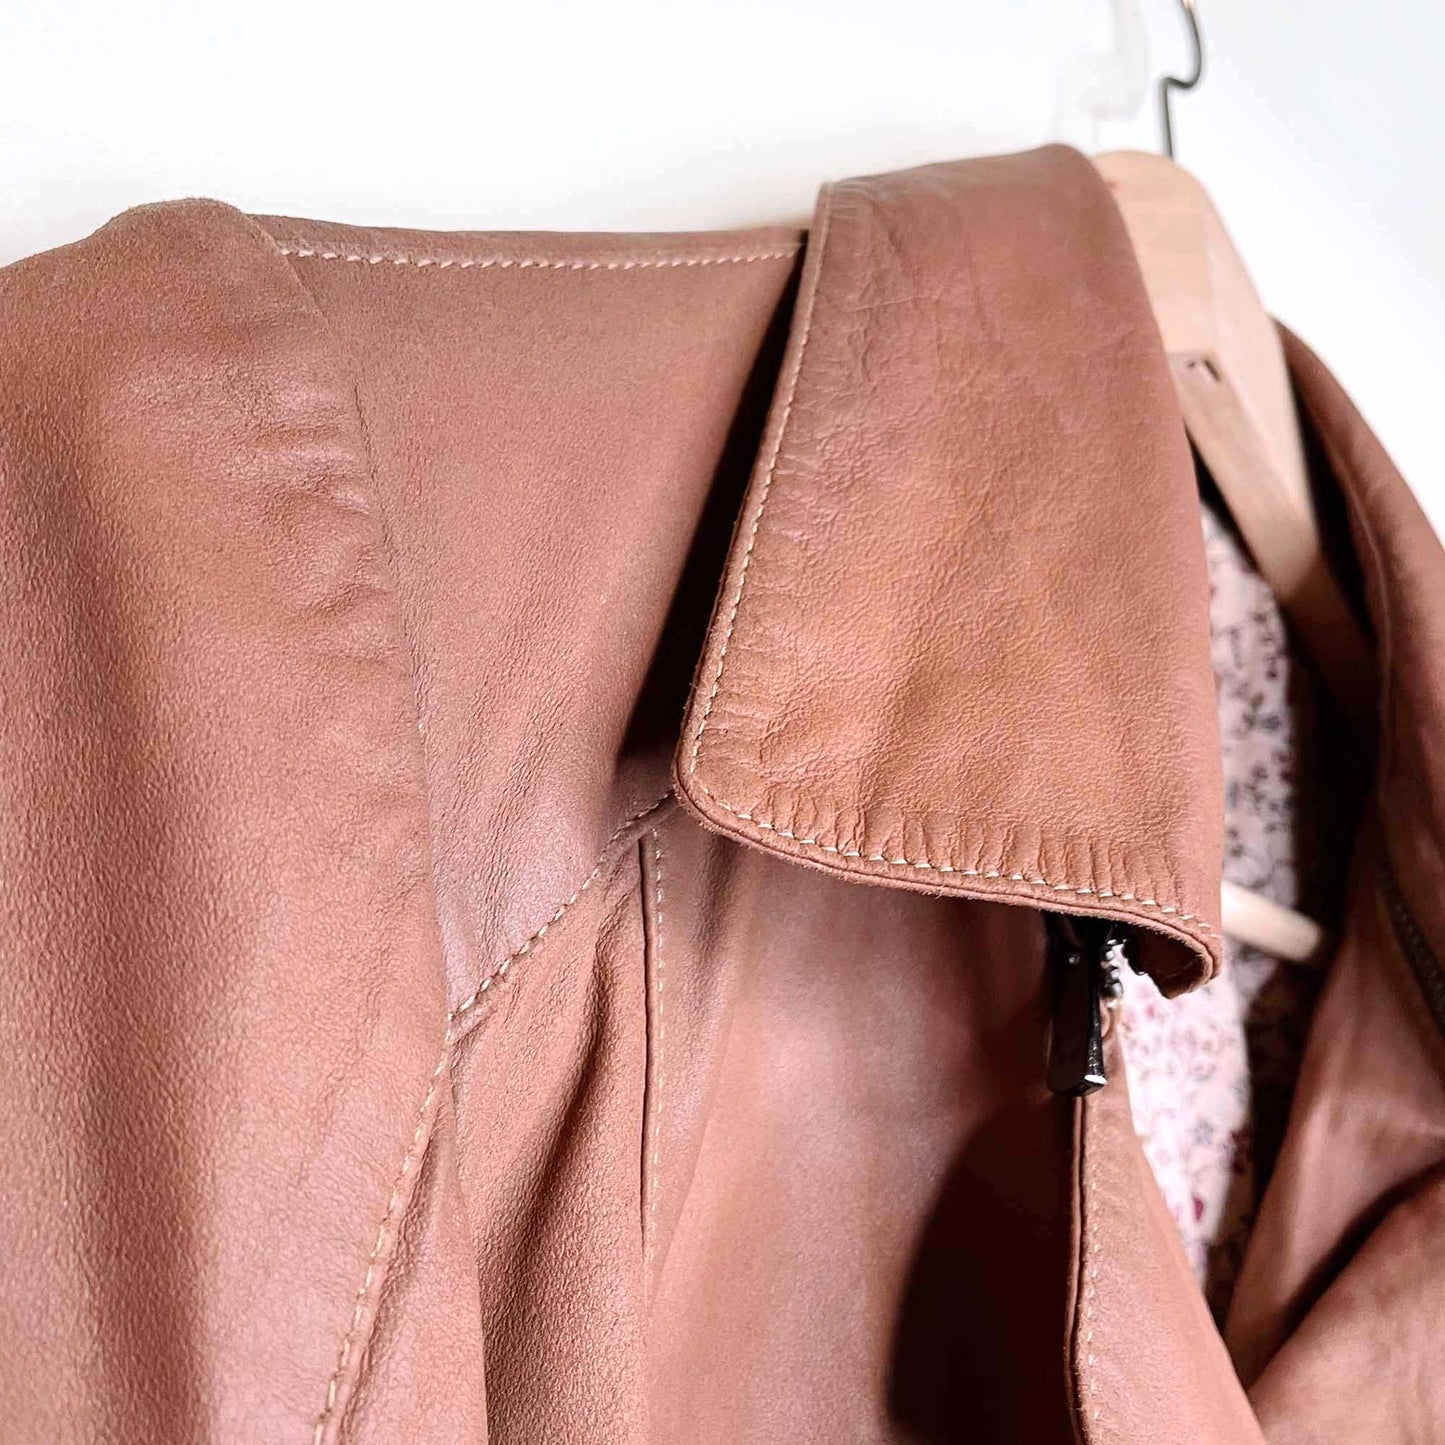 bod & christensen brown leather moto jacket - size small